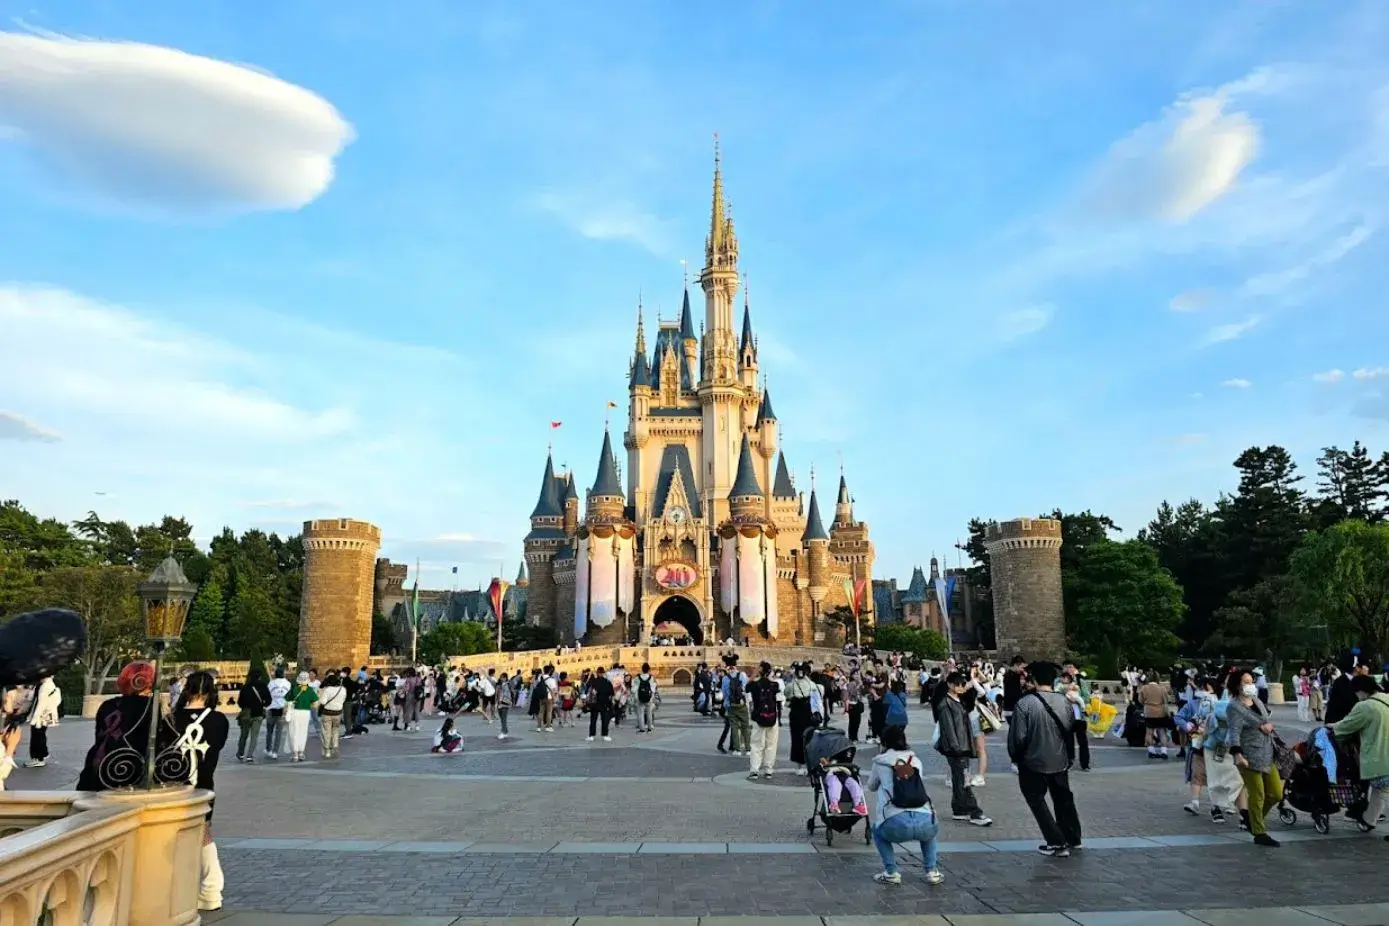 Disneyland Tokyo